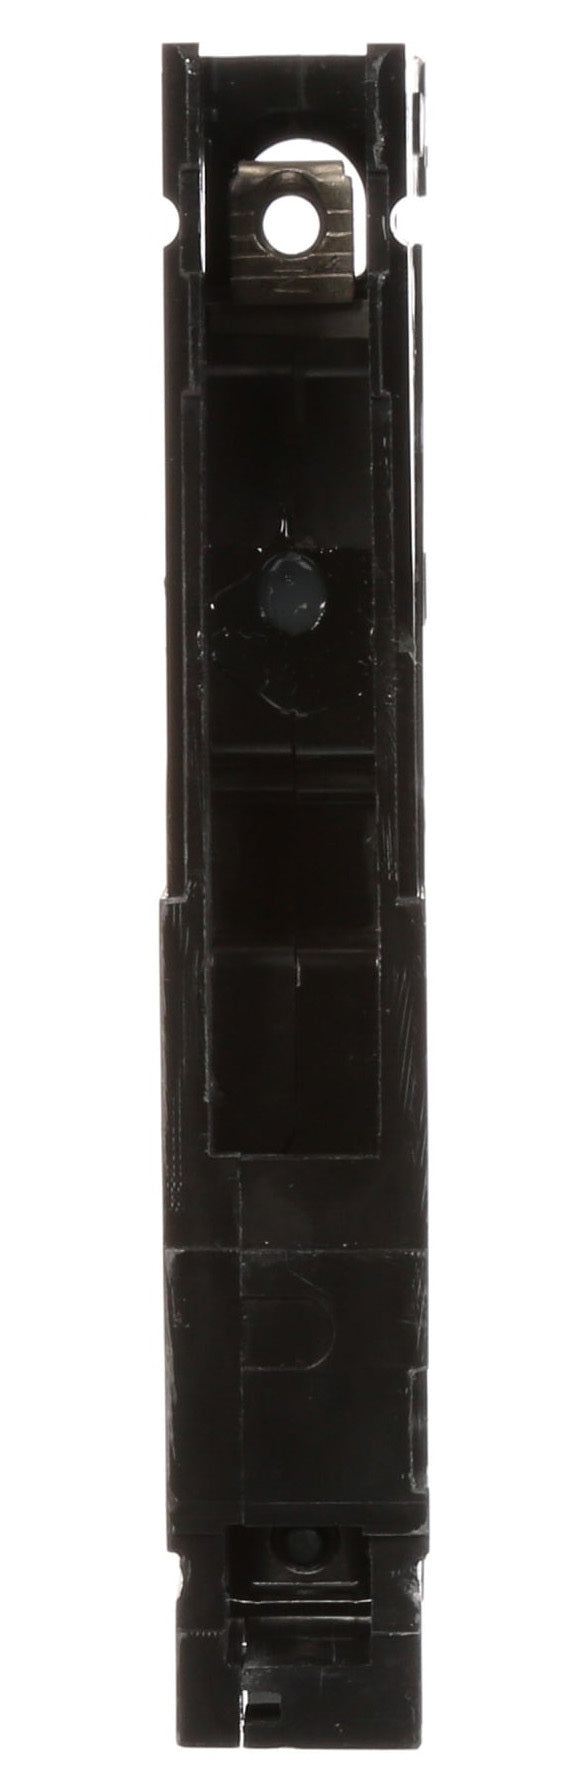 ED21B020 - Siemens - Molded Case Circuit Breaker